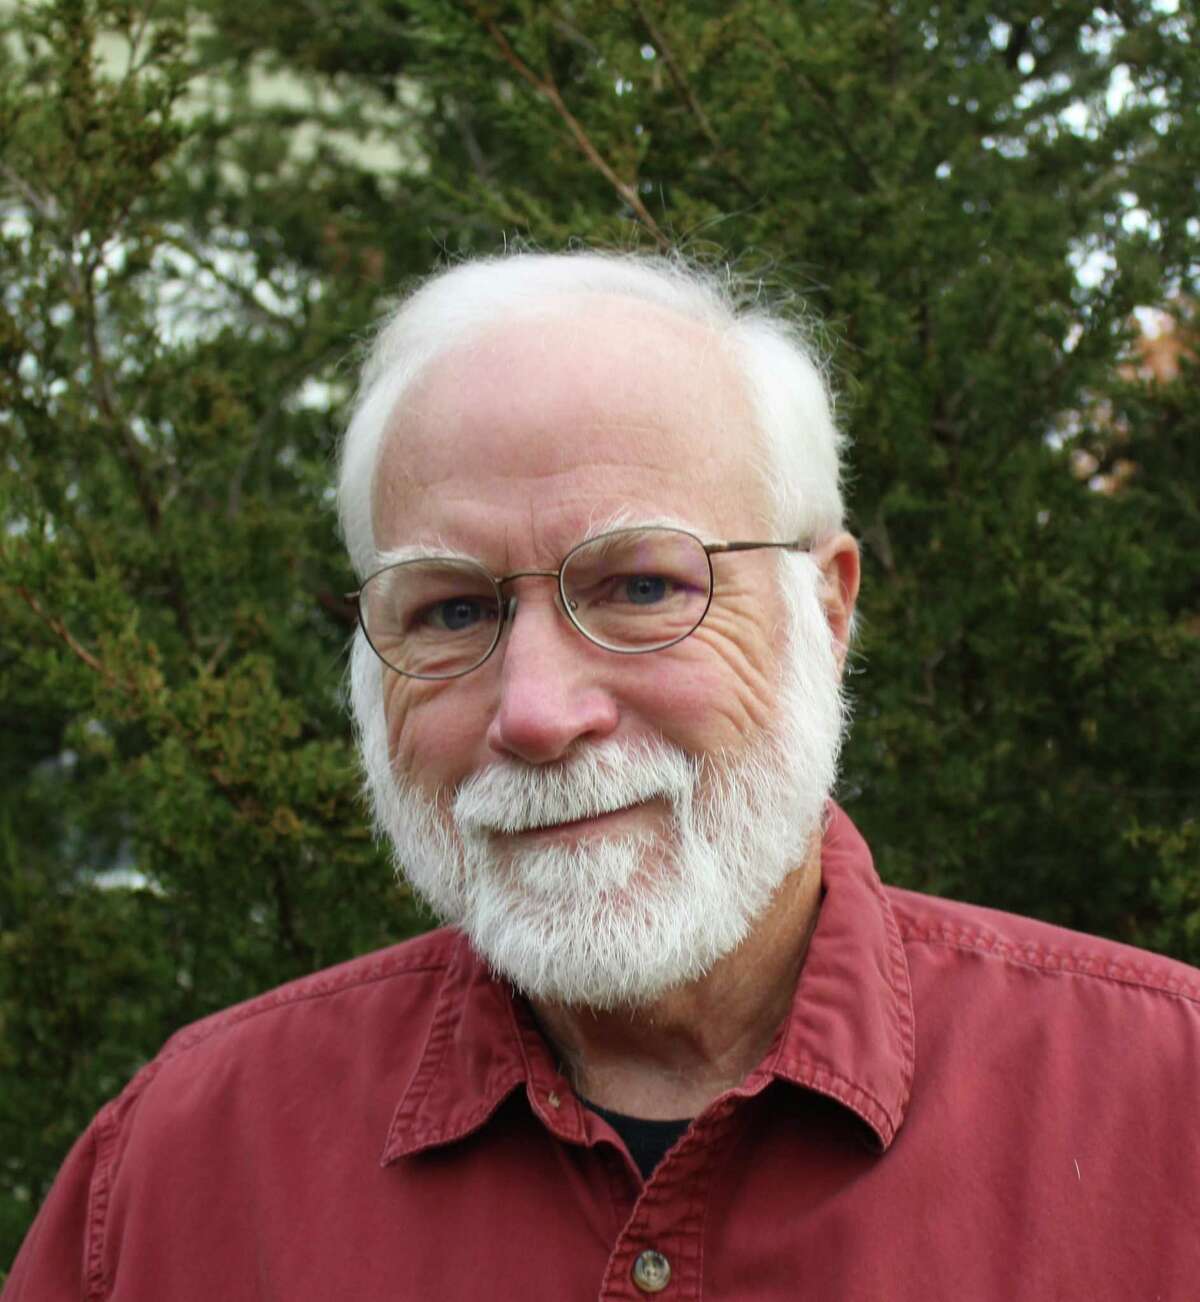 Historian, archaeologist, author and teacher James Powers